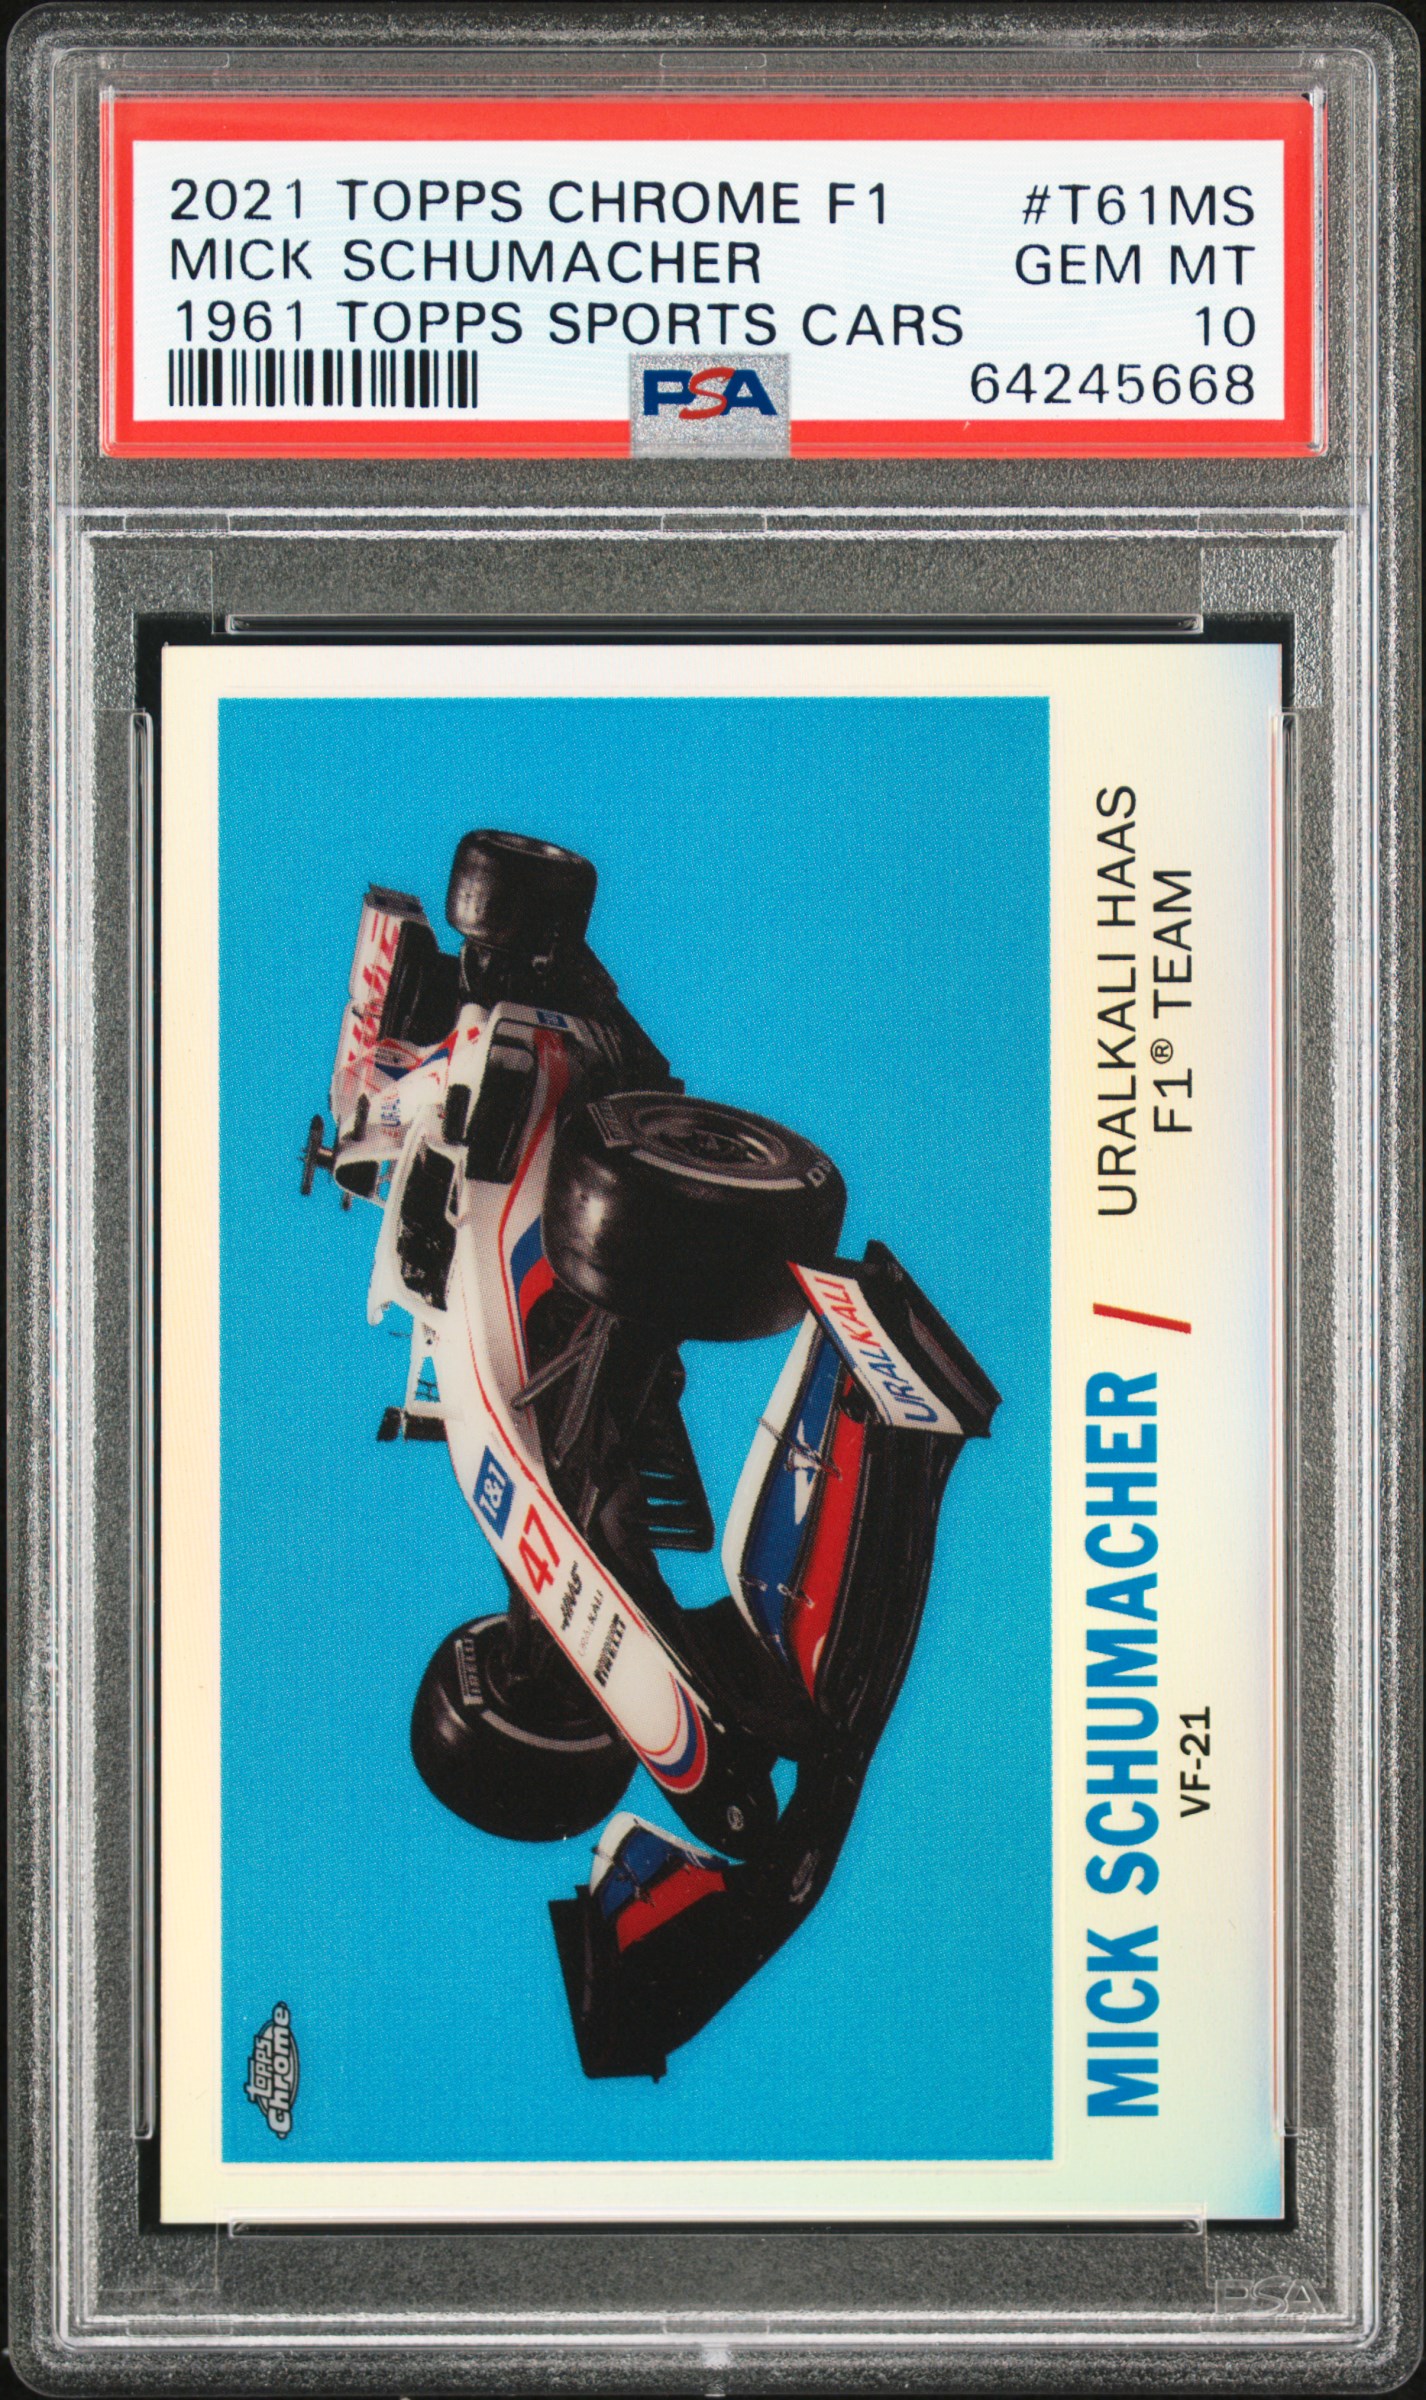 2021 Topps Chrome Formula 1 1961 Topps Sports Cars #T61MS Mick Schumacher Rookie Card – PSA GEM MT 10